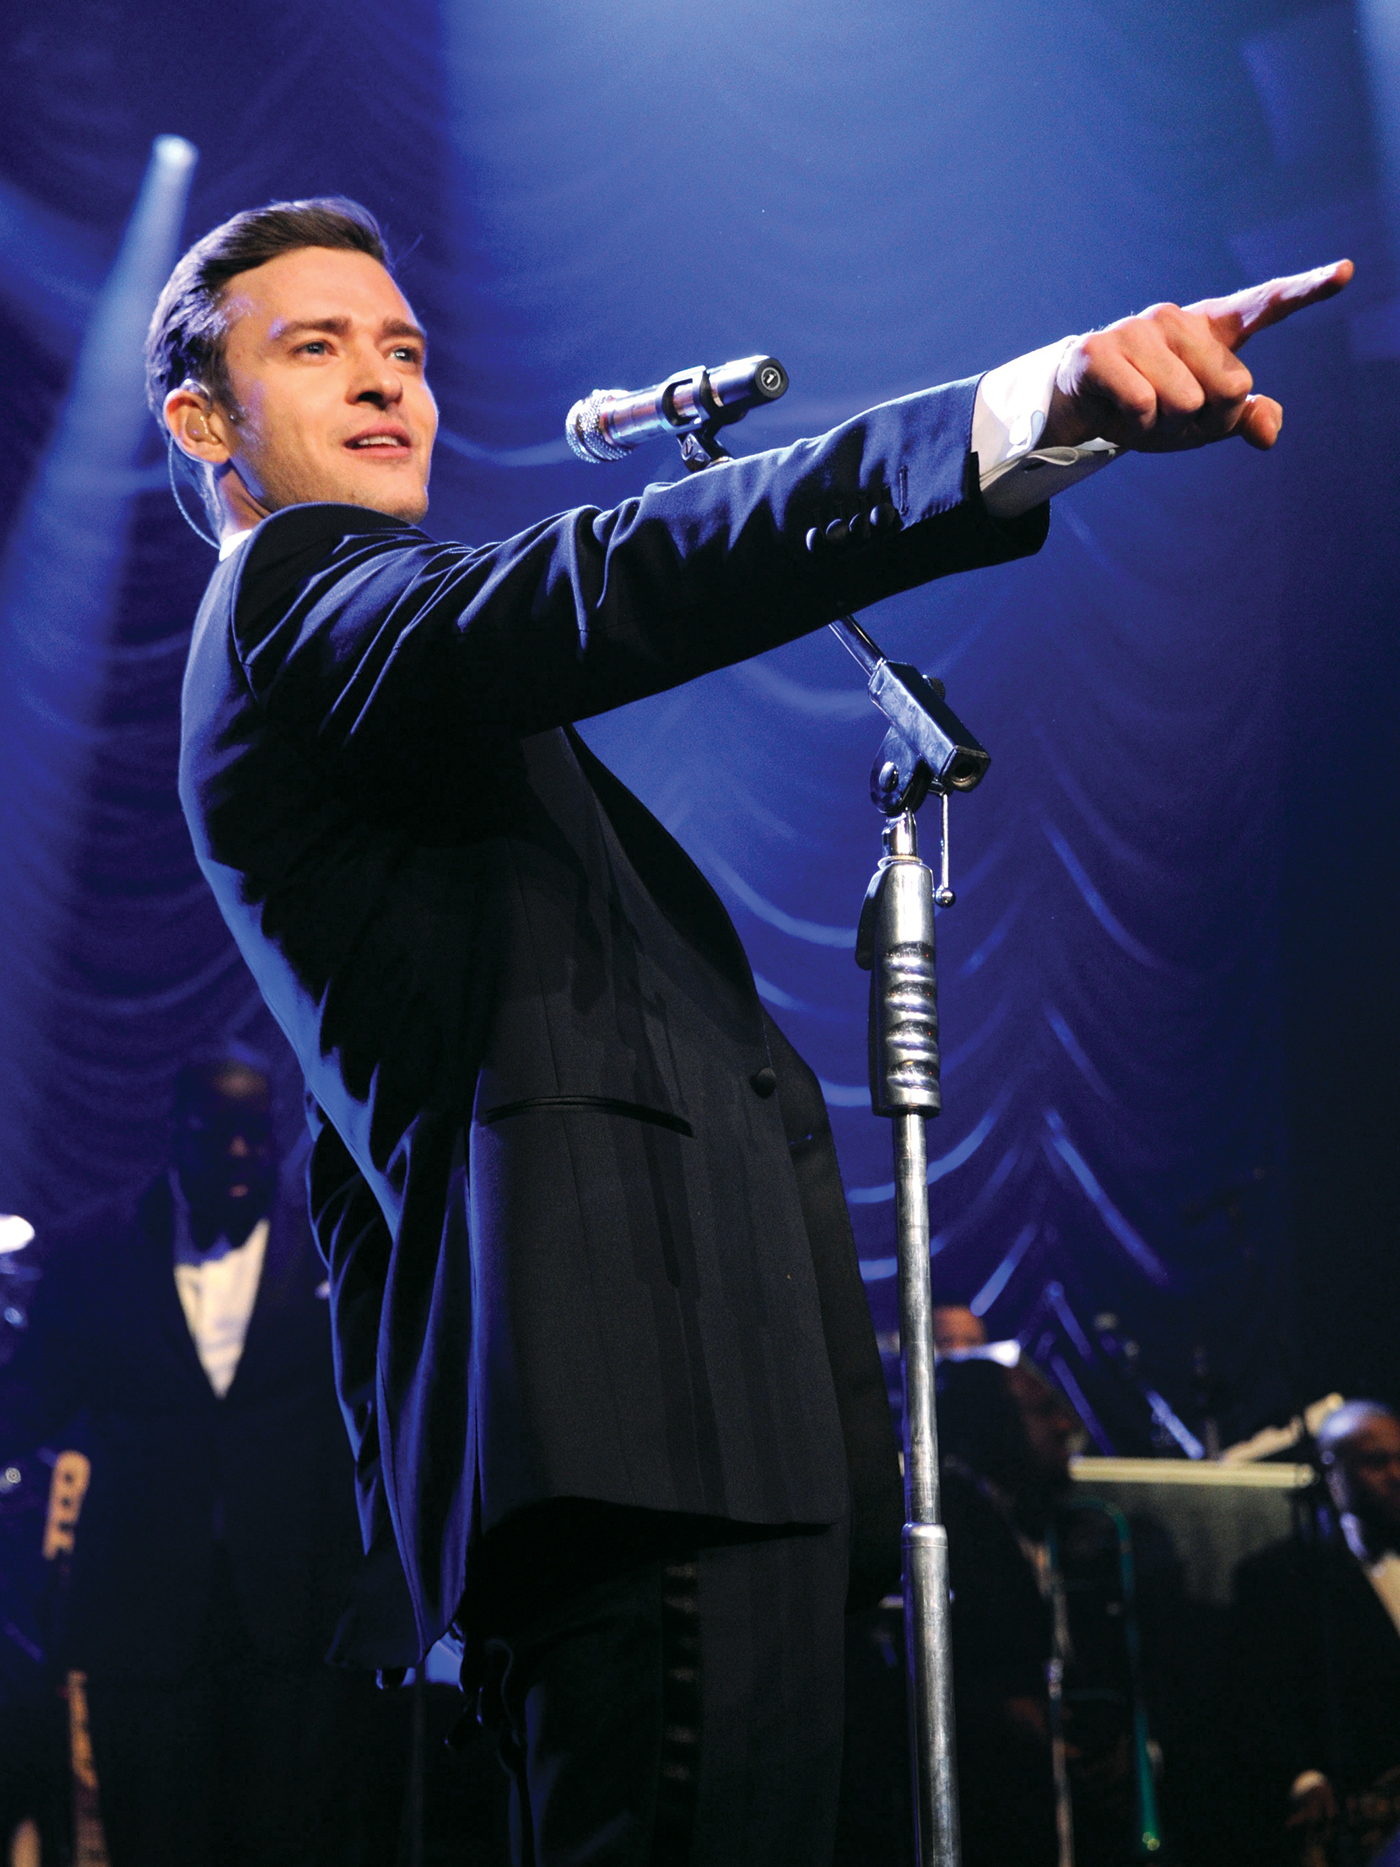 http://clynemedia.com/audiotechnica/Timberlake/Timberlake.jpg